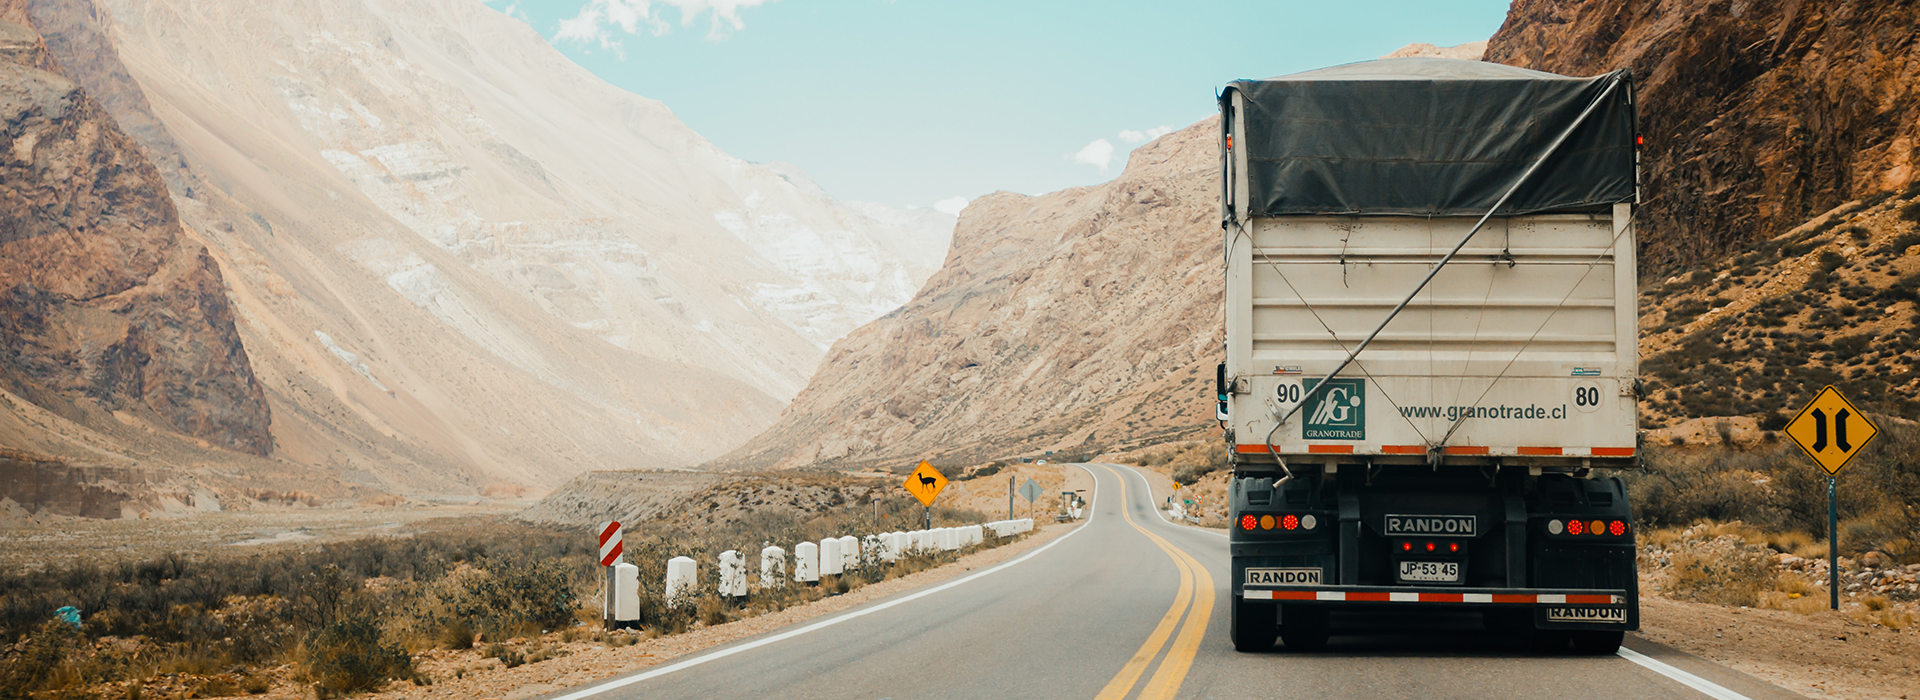 Transporter truck image